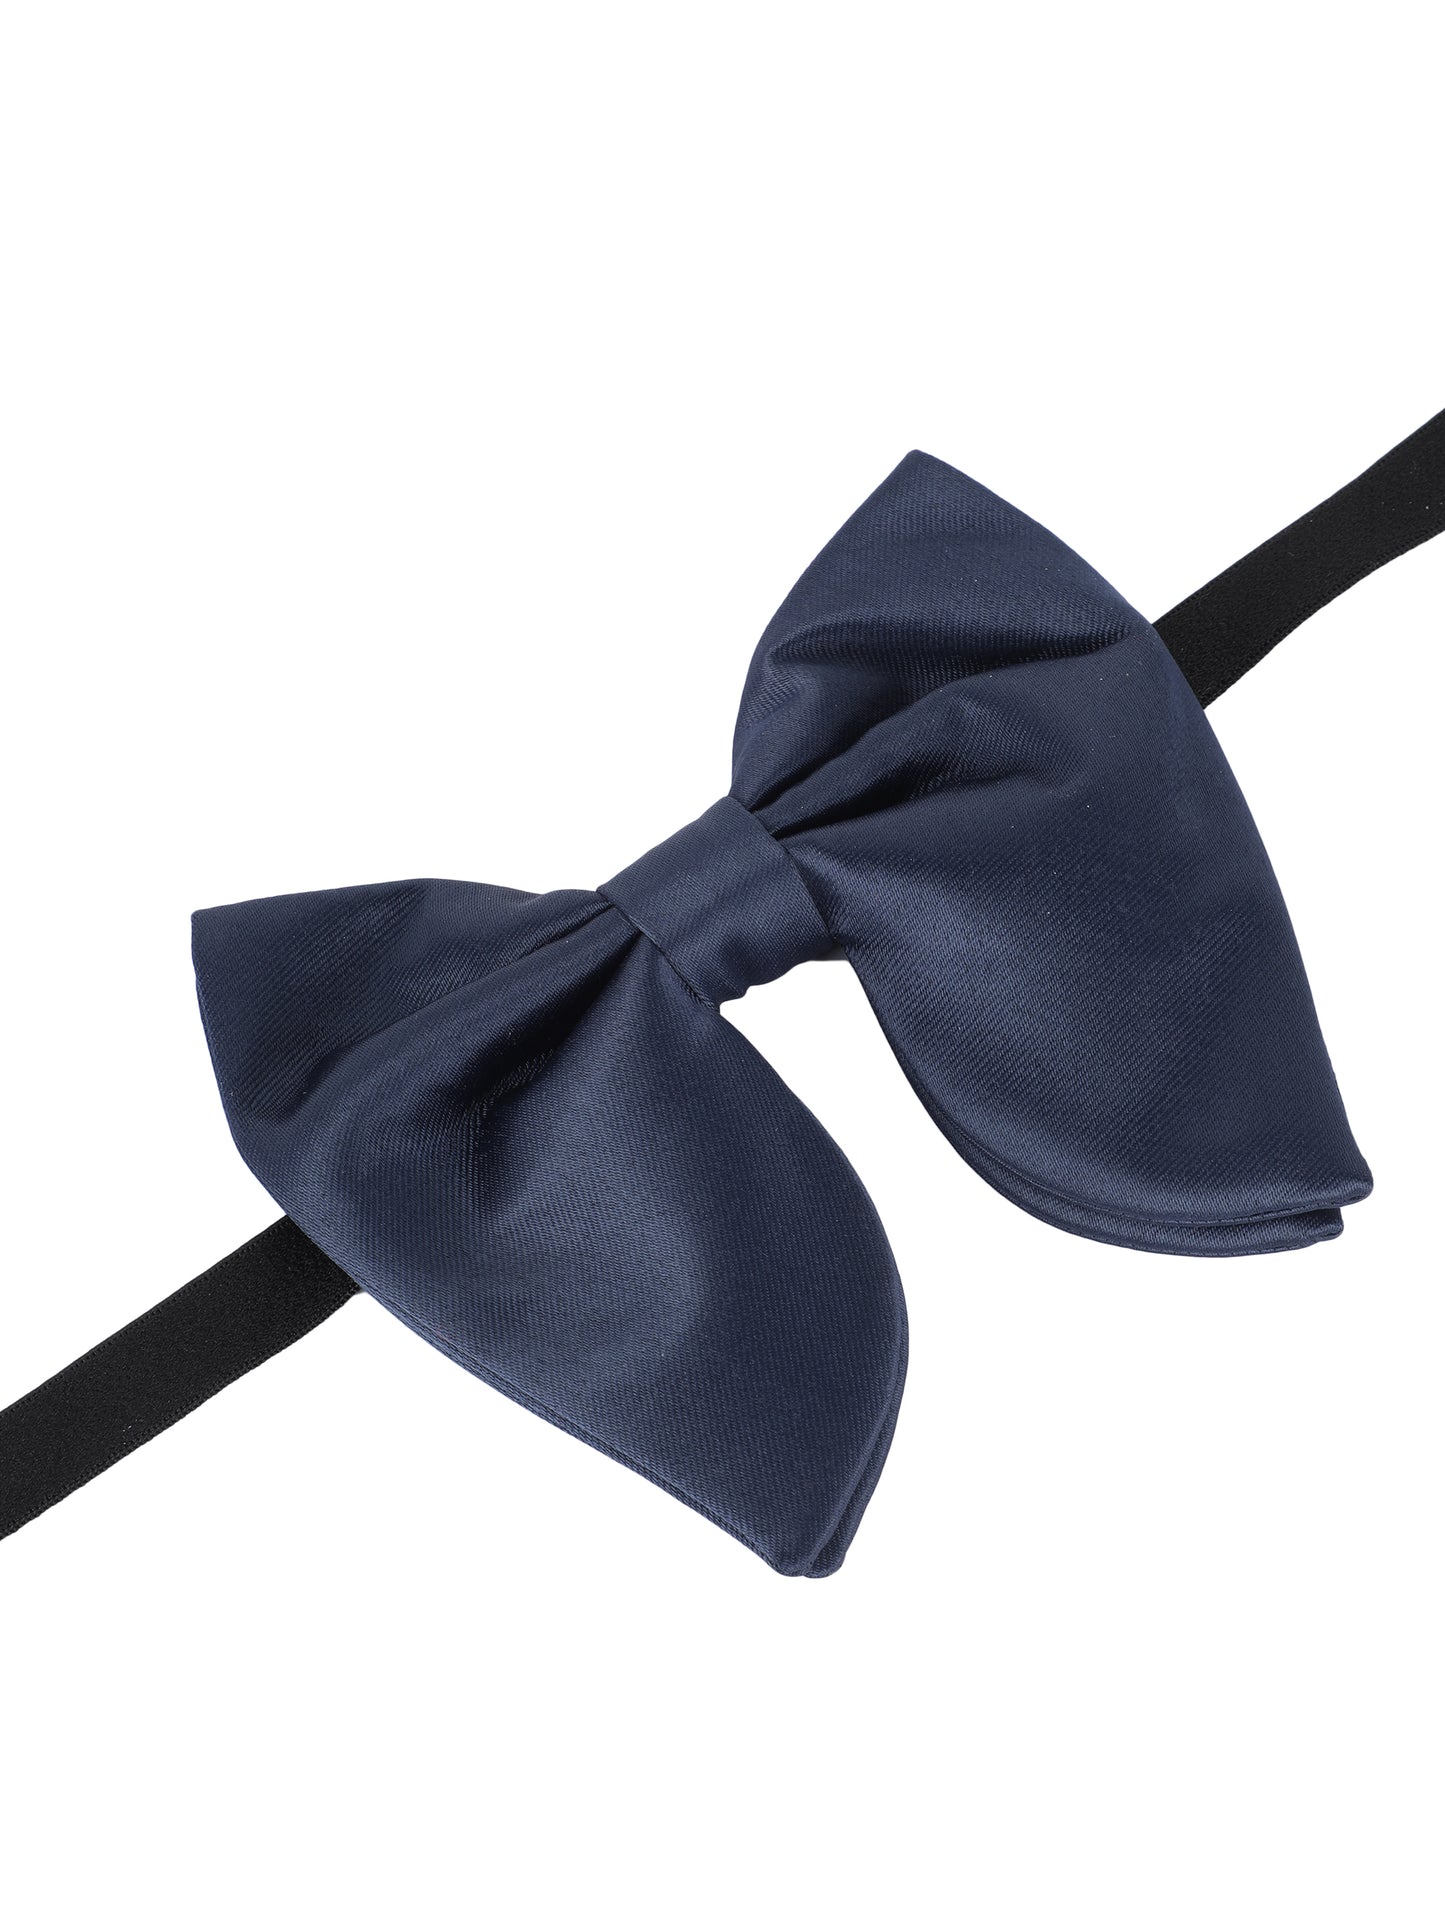 Alvaro Castagnino Men's Blue Colored Butterfly Type Bow Tie